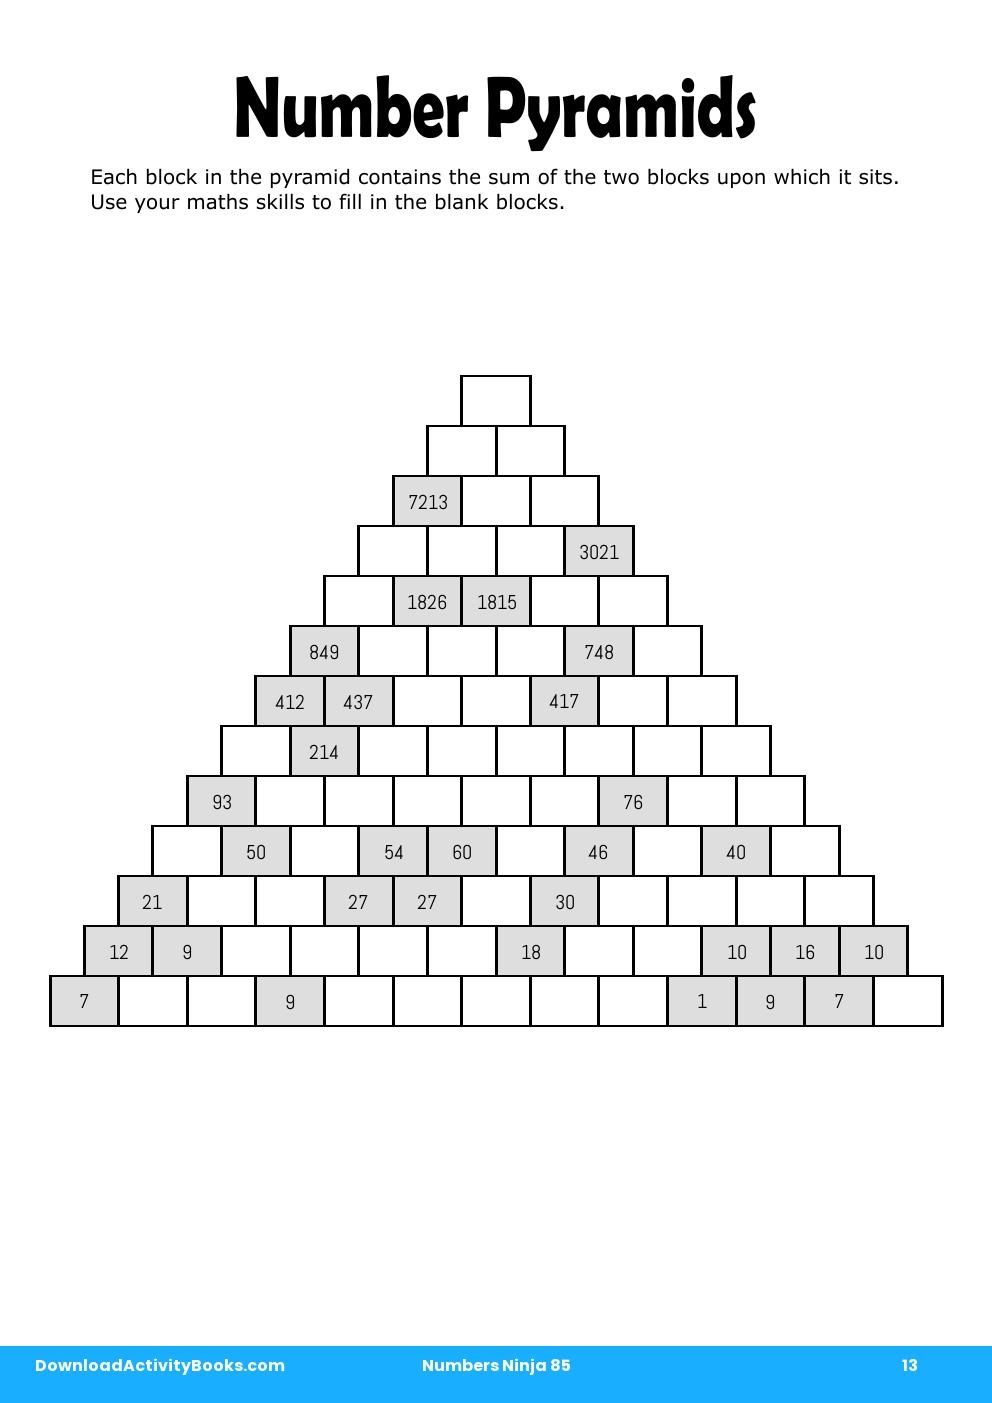 Number Pyramids in Numbers Ninja 85